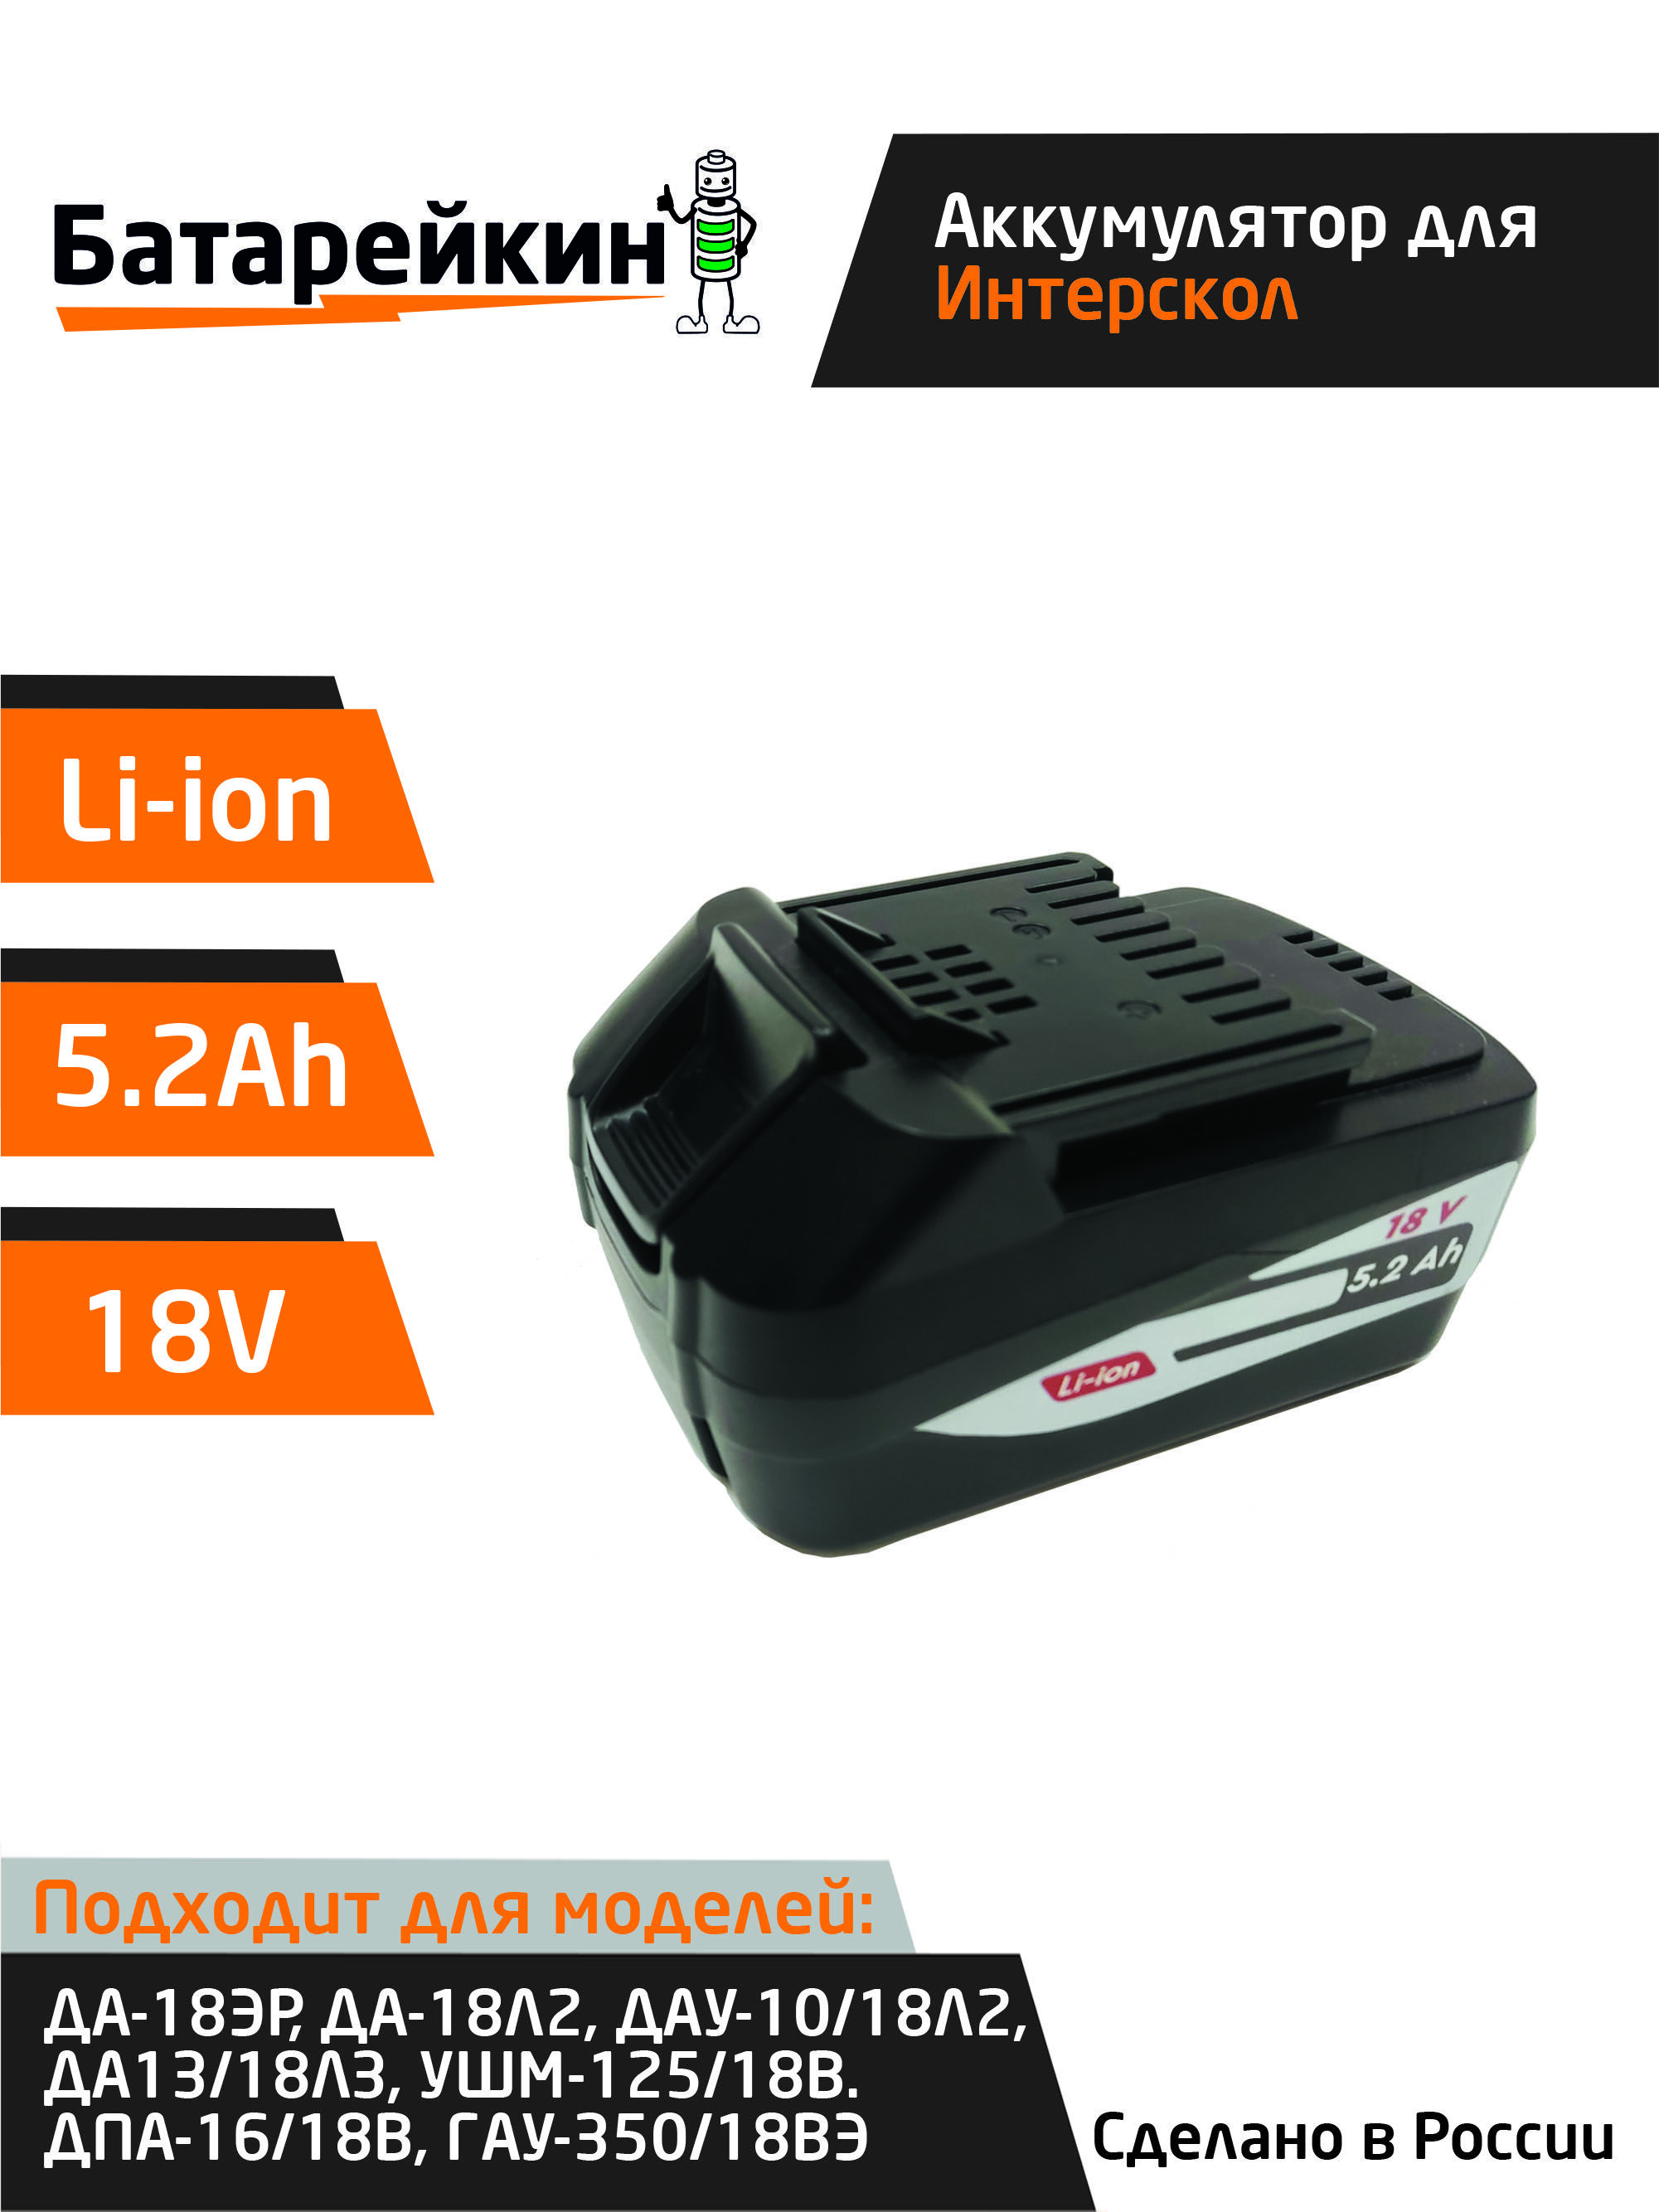 Аккумулятор Батарейкин для Интерскол 18V 5.2Ah Li-lon